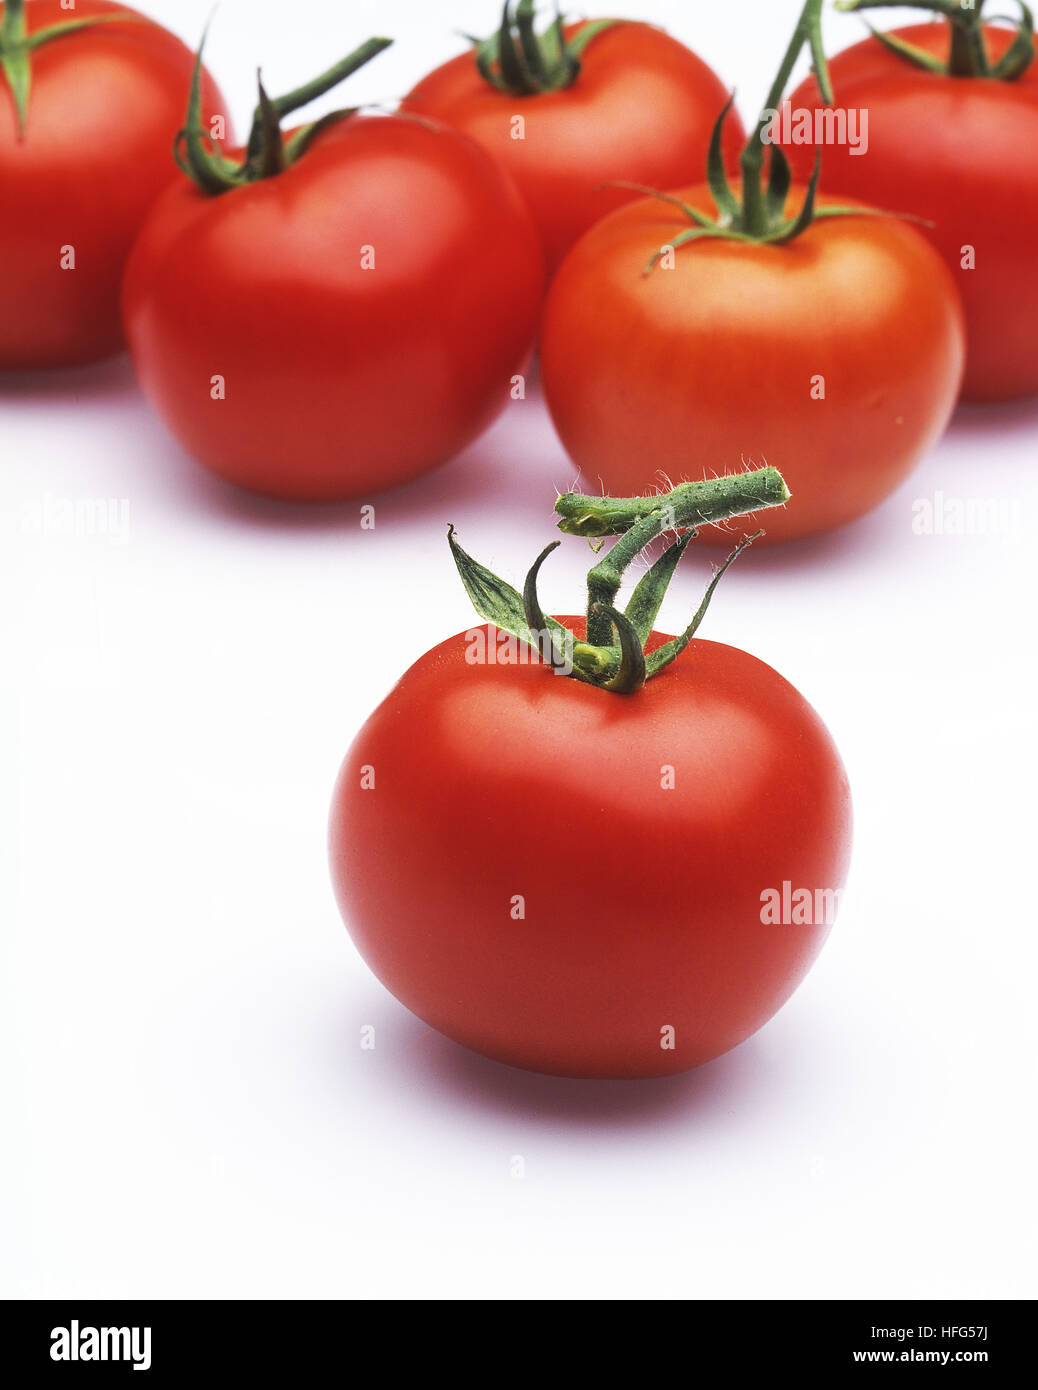 Pomodori rossi, Solanum lycopersicum contro uno sfondo bianco Foto Stock